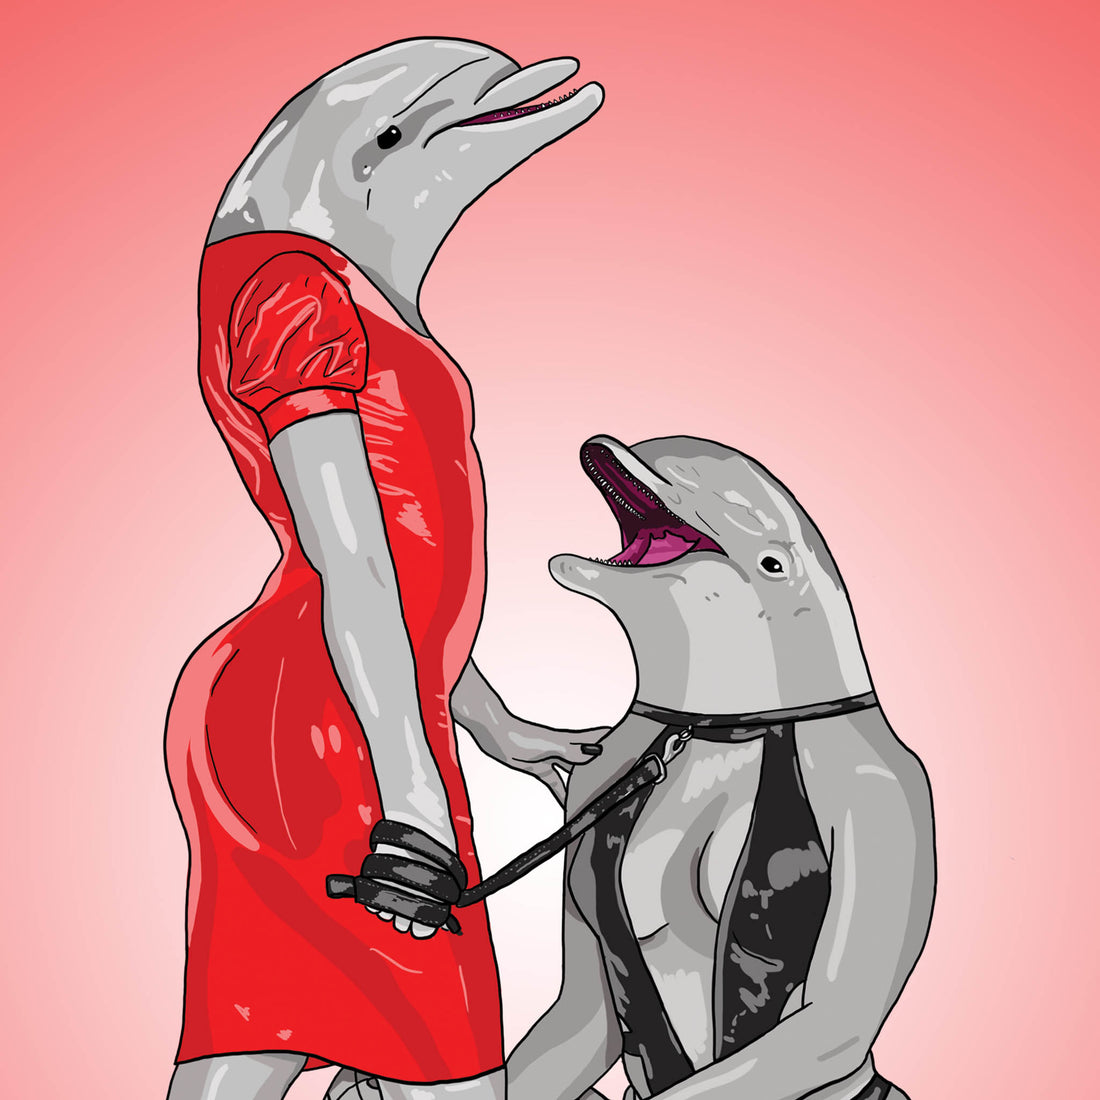 BDSM Dolphins print